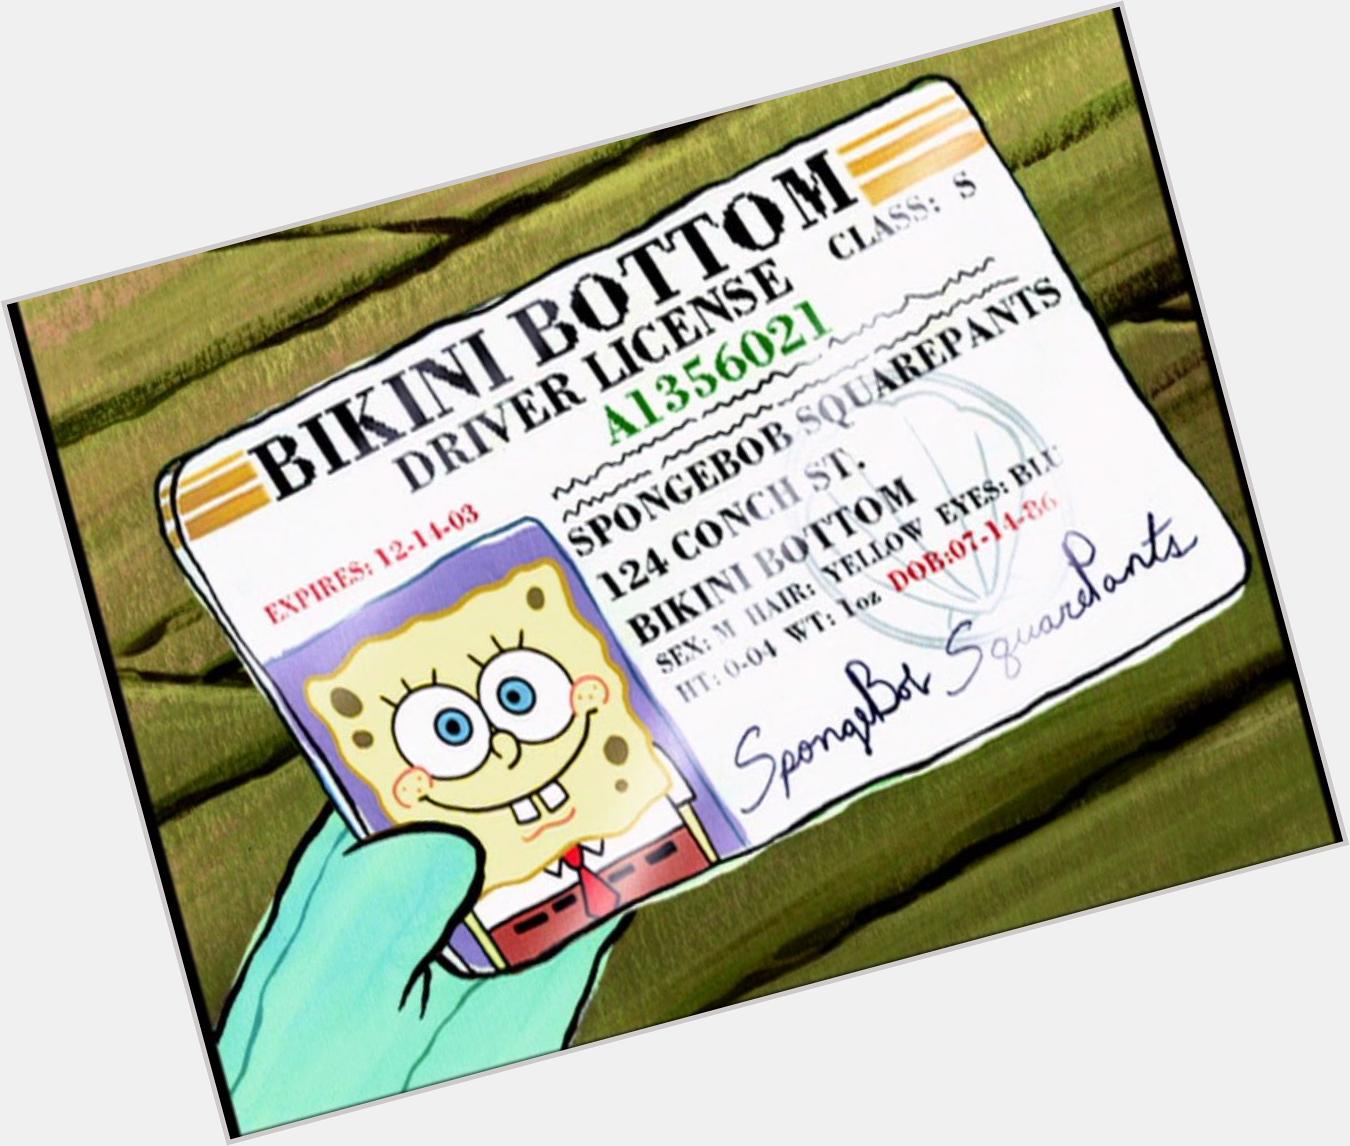 Spongebob Squarepants turns 31 today. Happy Birthday to HIM! 